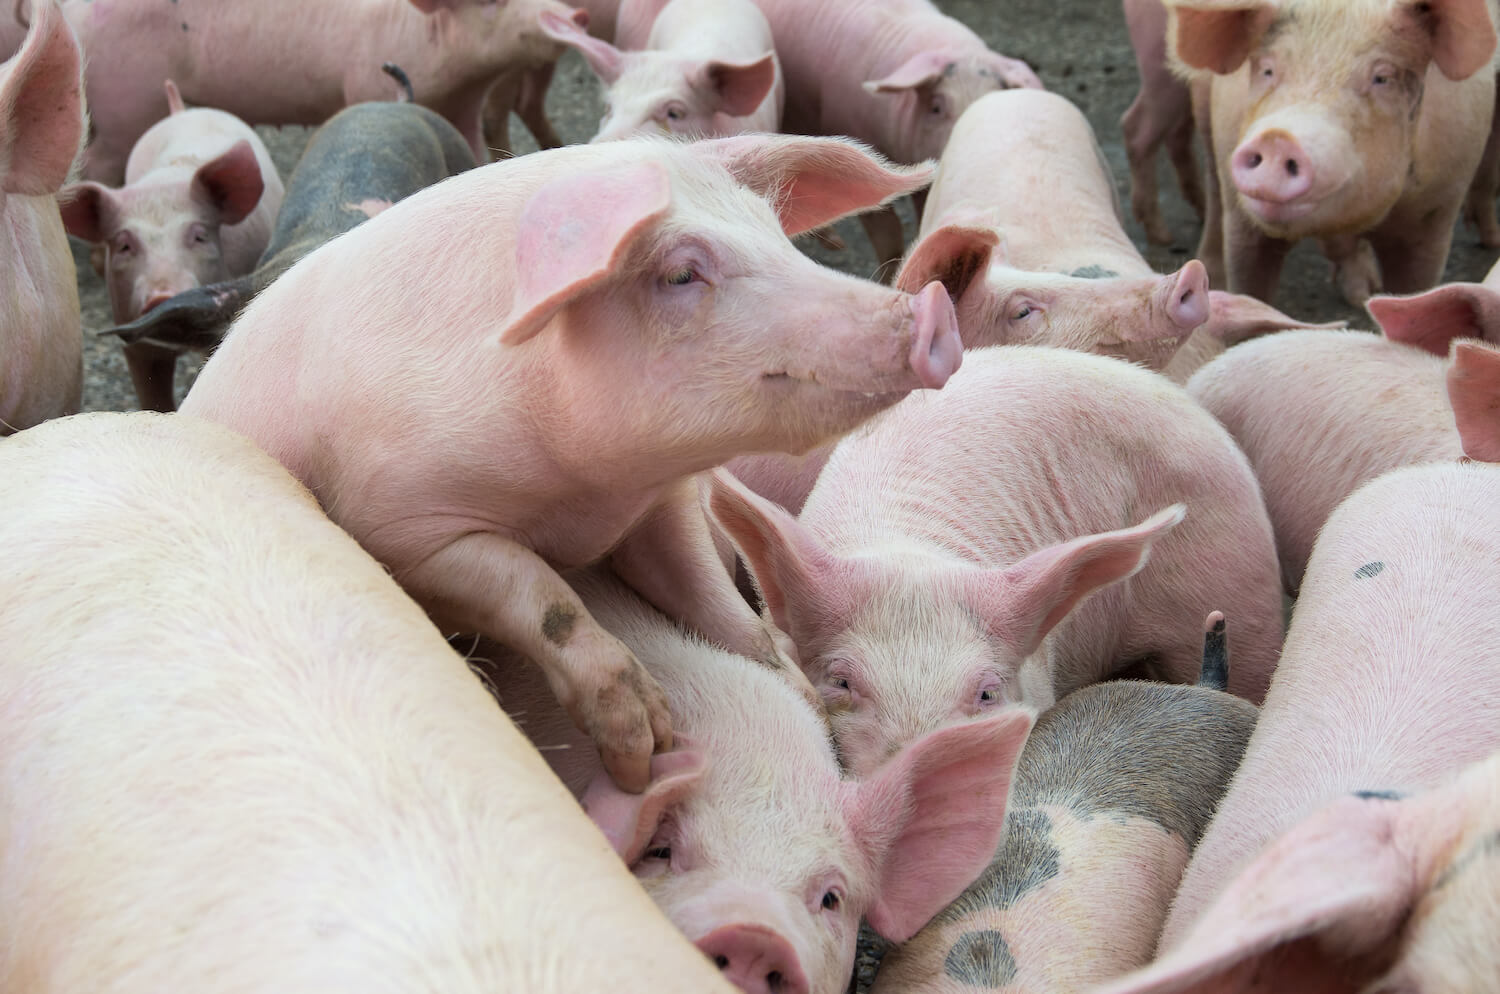 Group of livestock pigs. December 2020